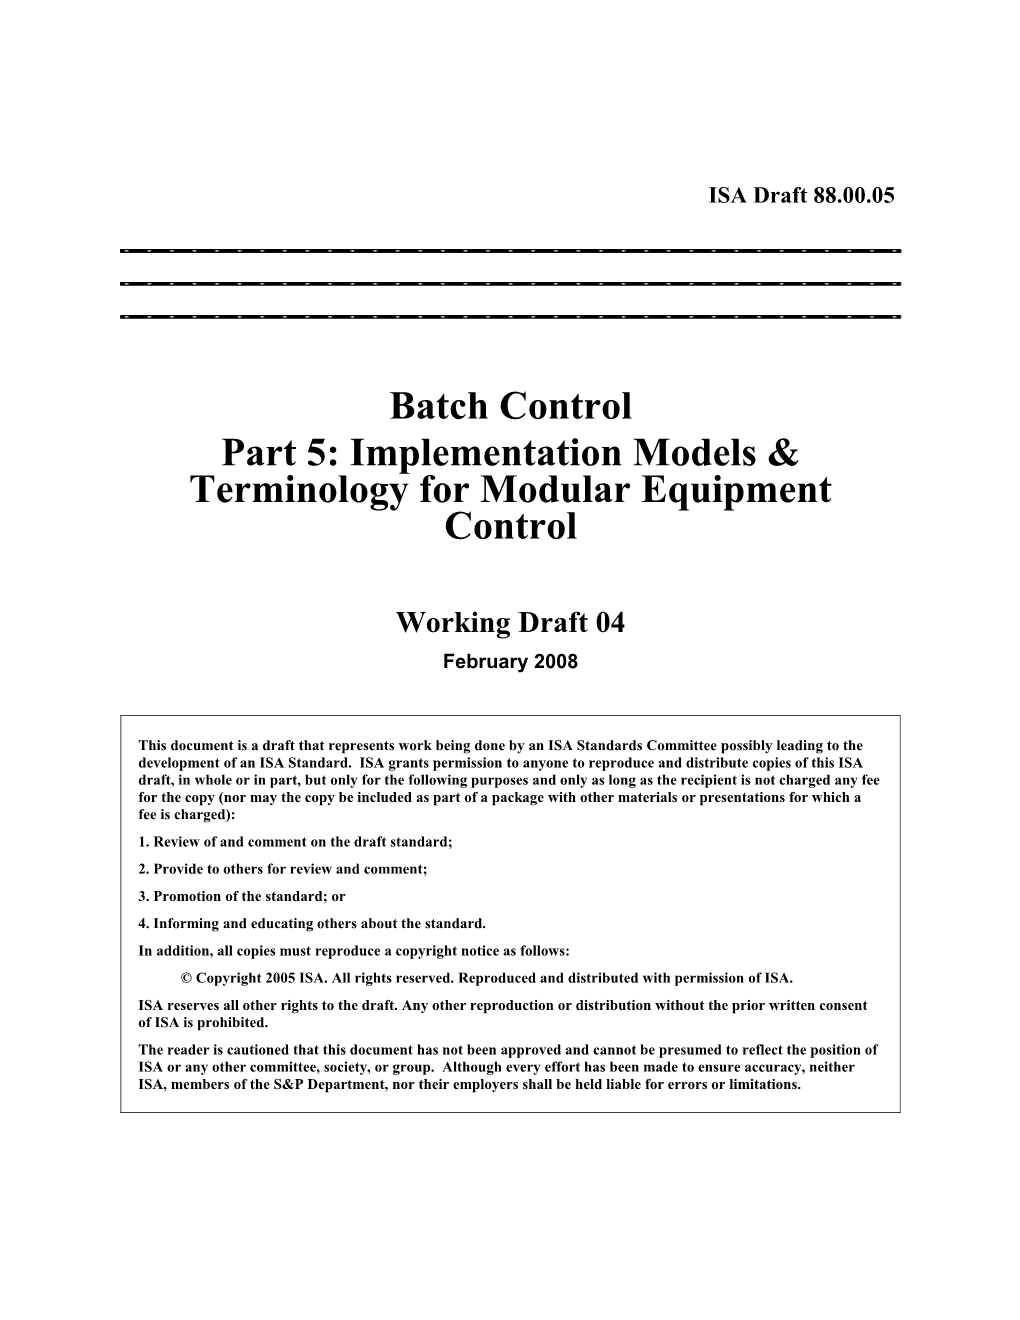 Part 5: Implementation Models & Terminologyfor Modular Equipment Control